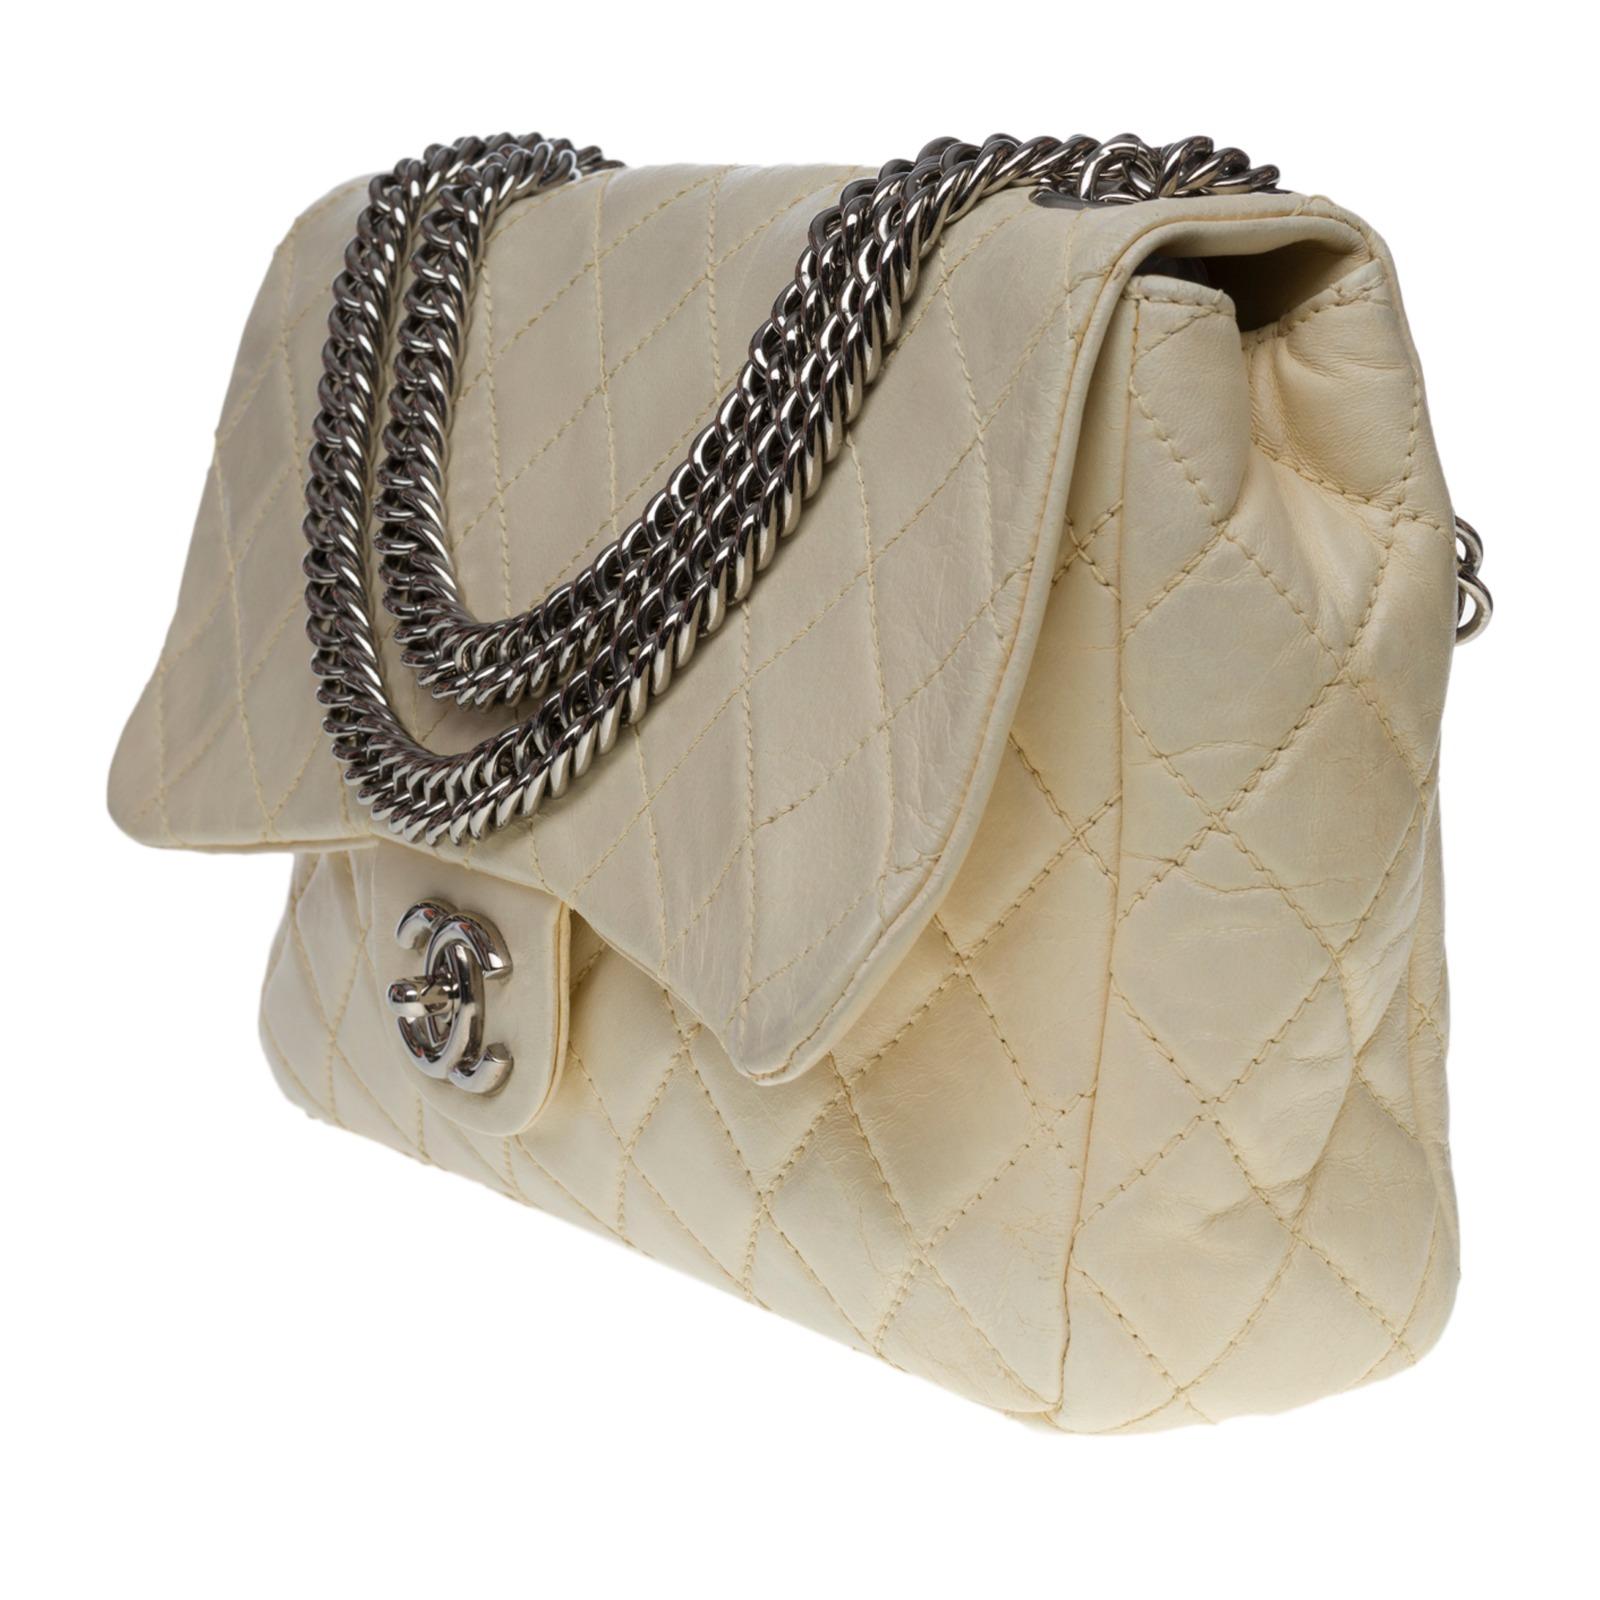 Women's Chanel Timeless/Classique Jumbo Flap bag handbag in ecru quilted lambskin, SHW For Sale